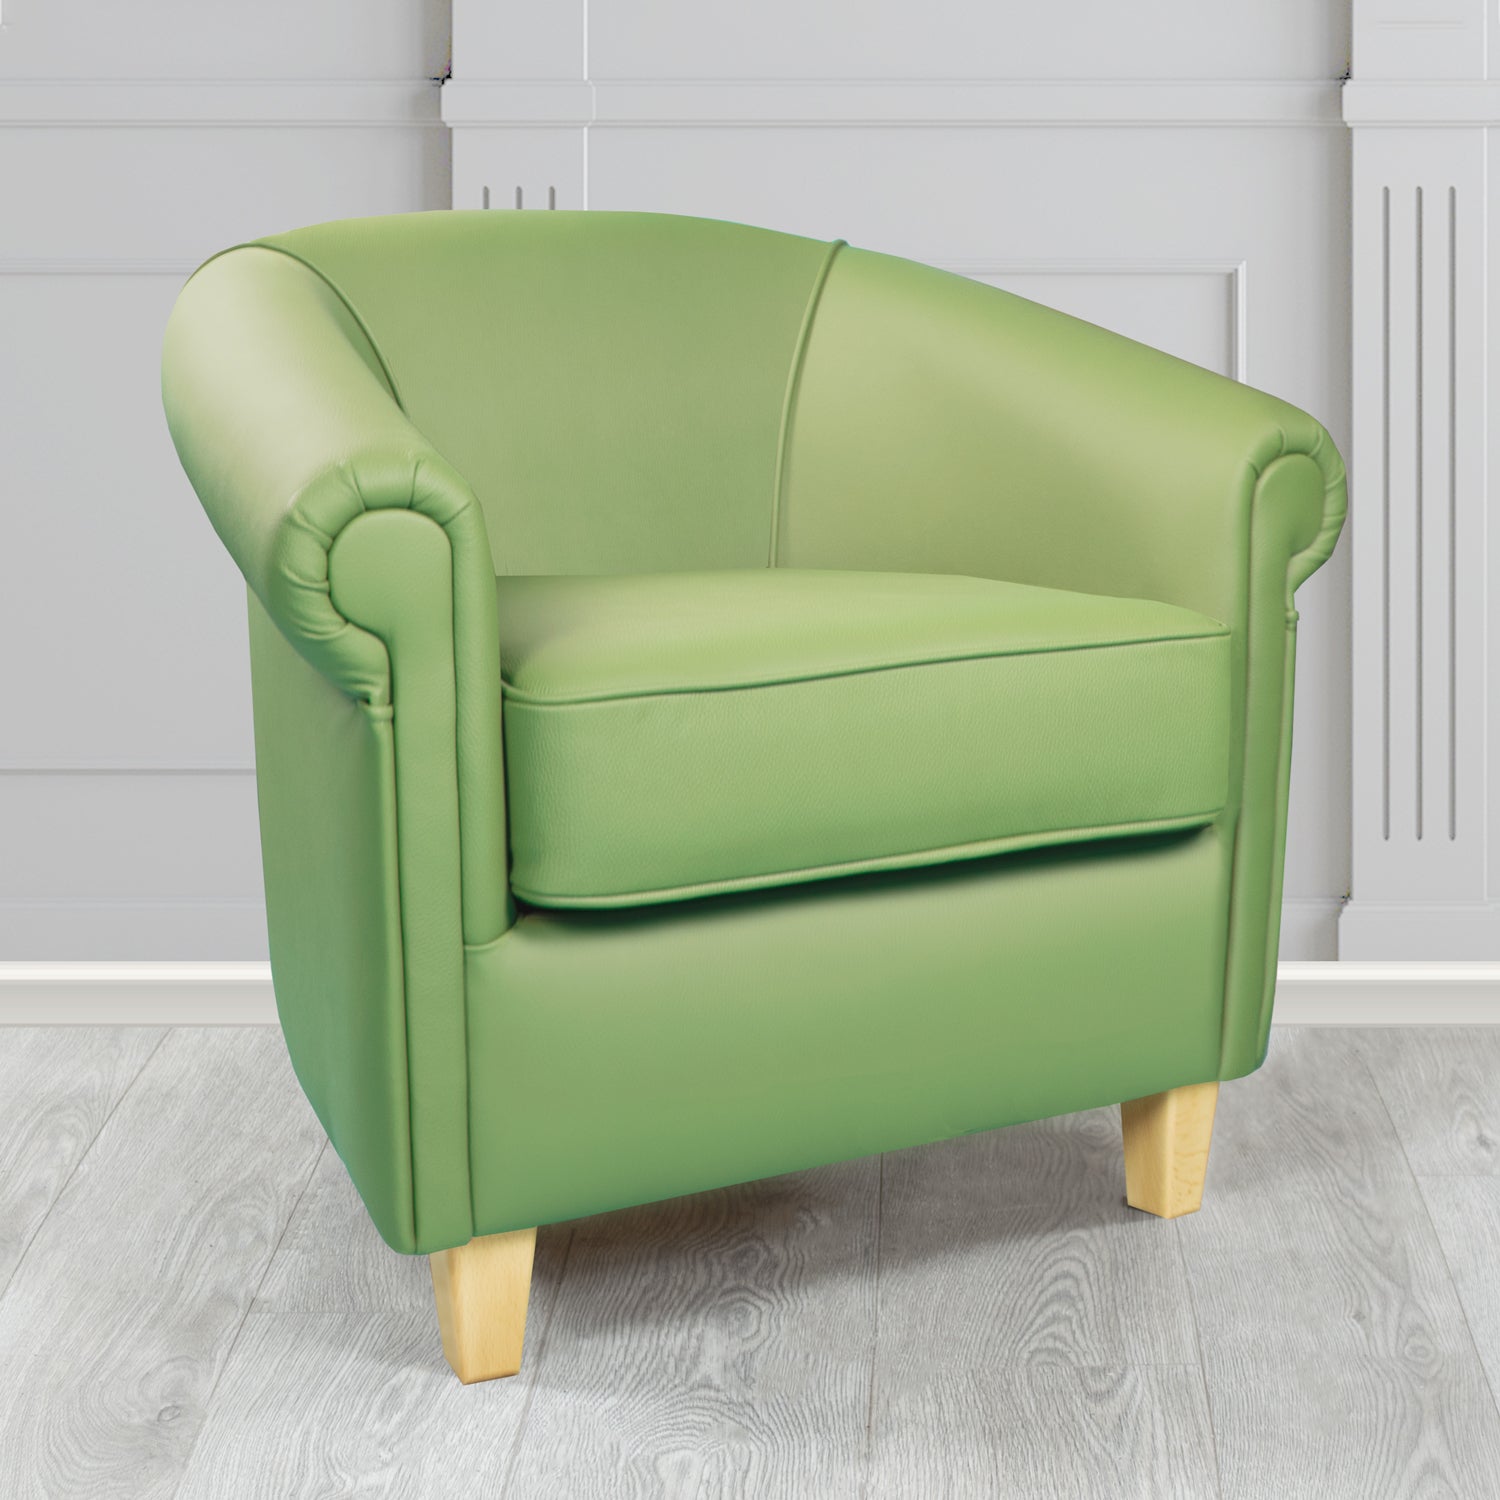 Siena Tub Chair in Crib 5 Shelly Pea Green Genuine Leather - The Tub Chair Shop